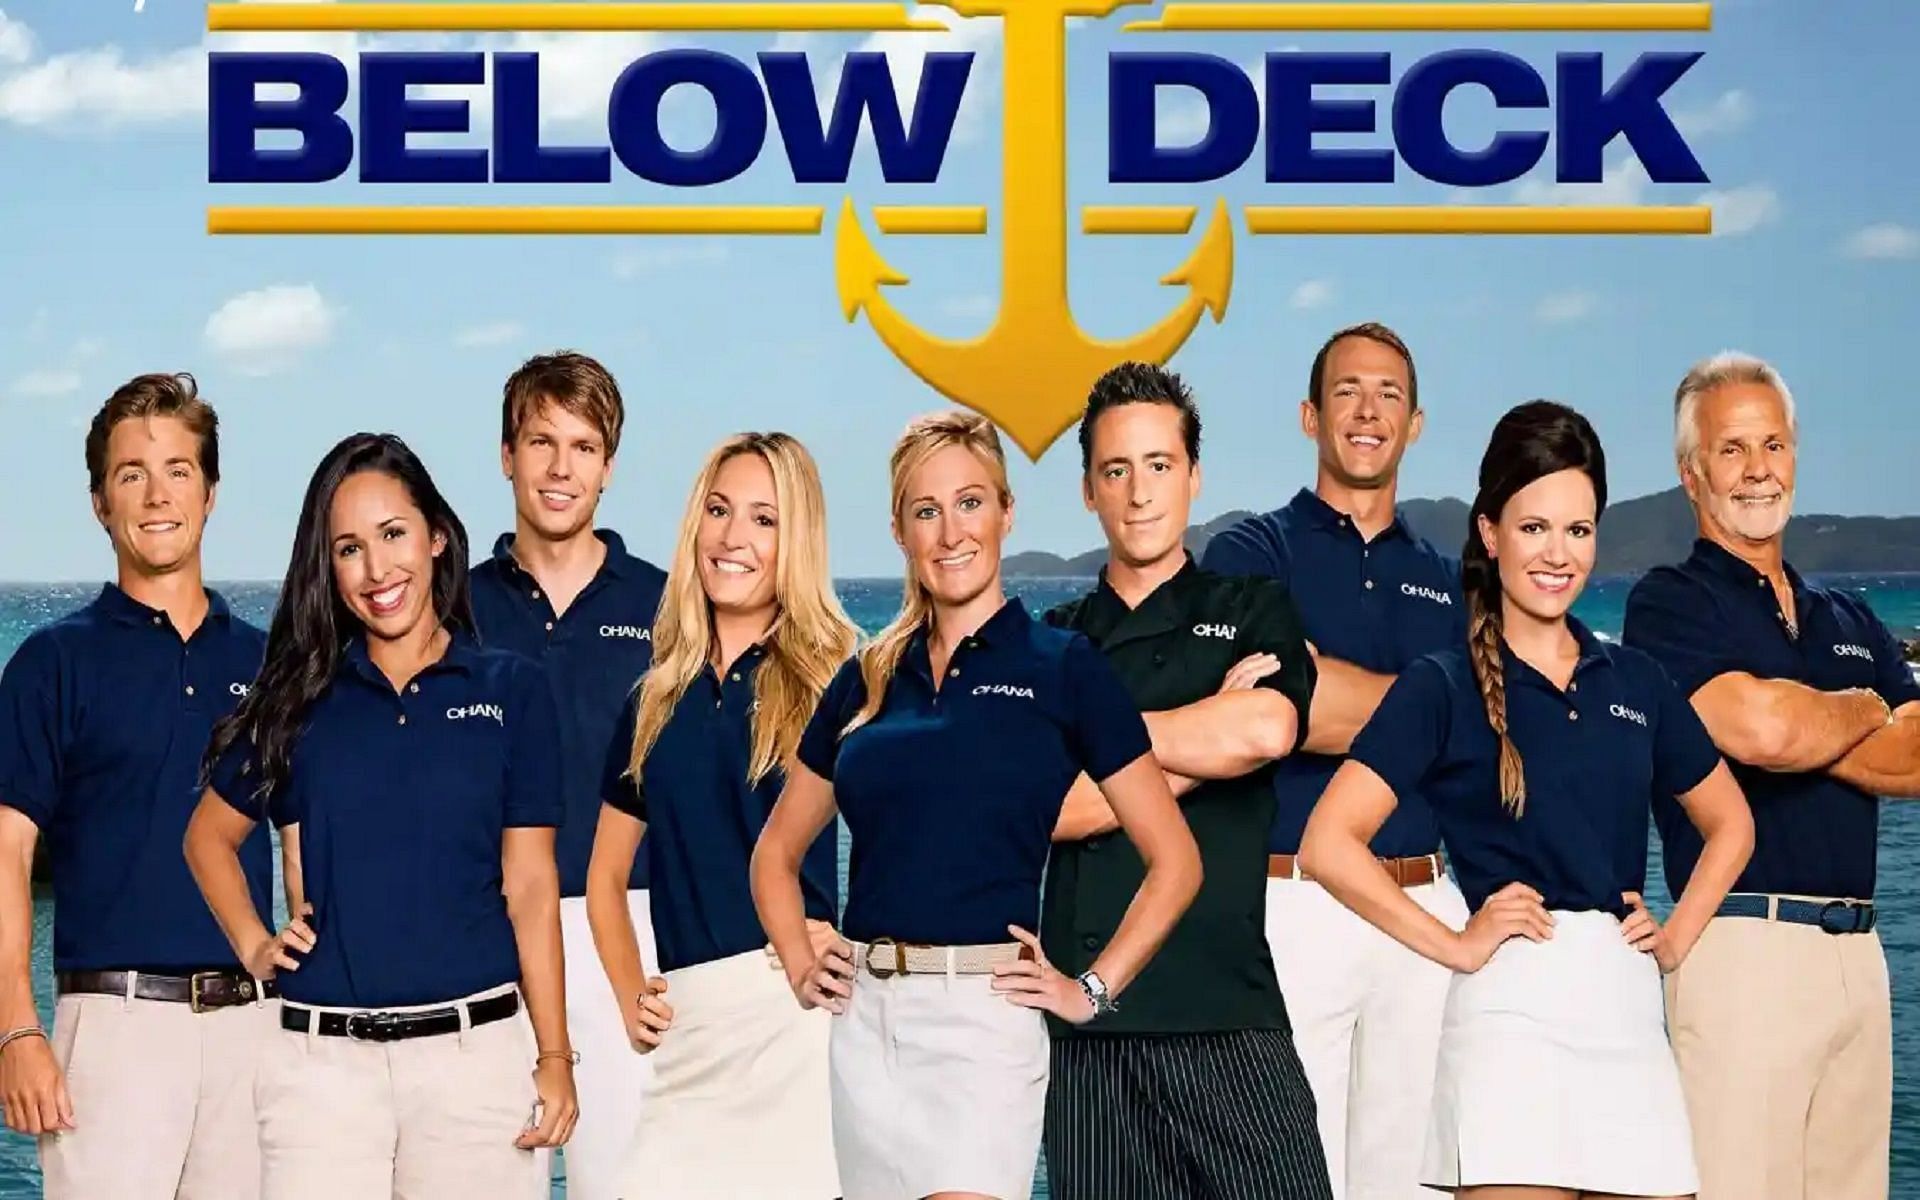 Below Deck season 9 to air reunion on February 7 on Bravo (Image via heavy.com)